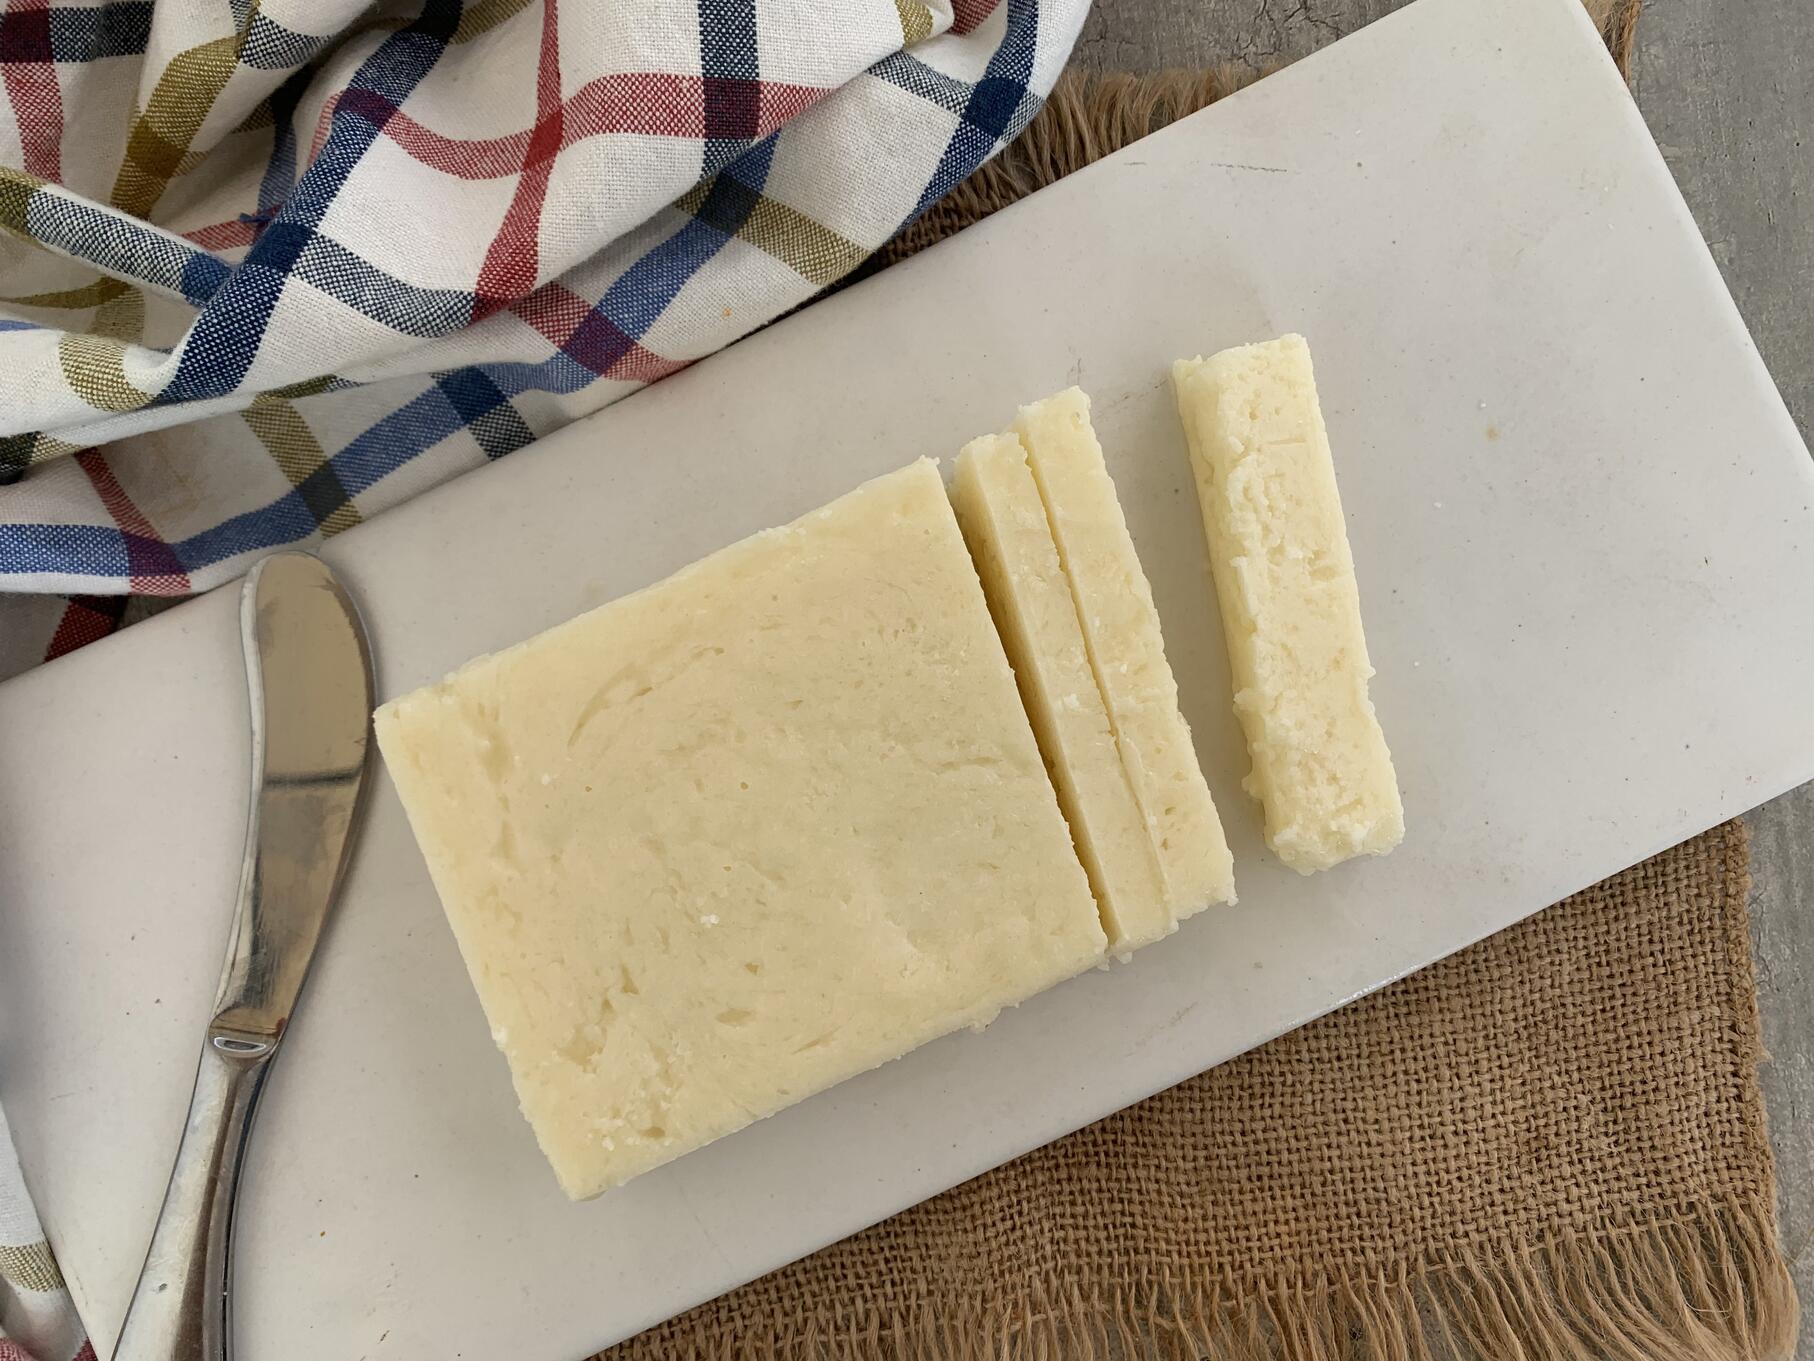 Homemade Vegan Butter Recipe